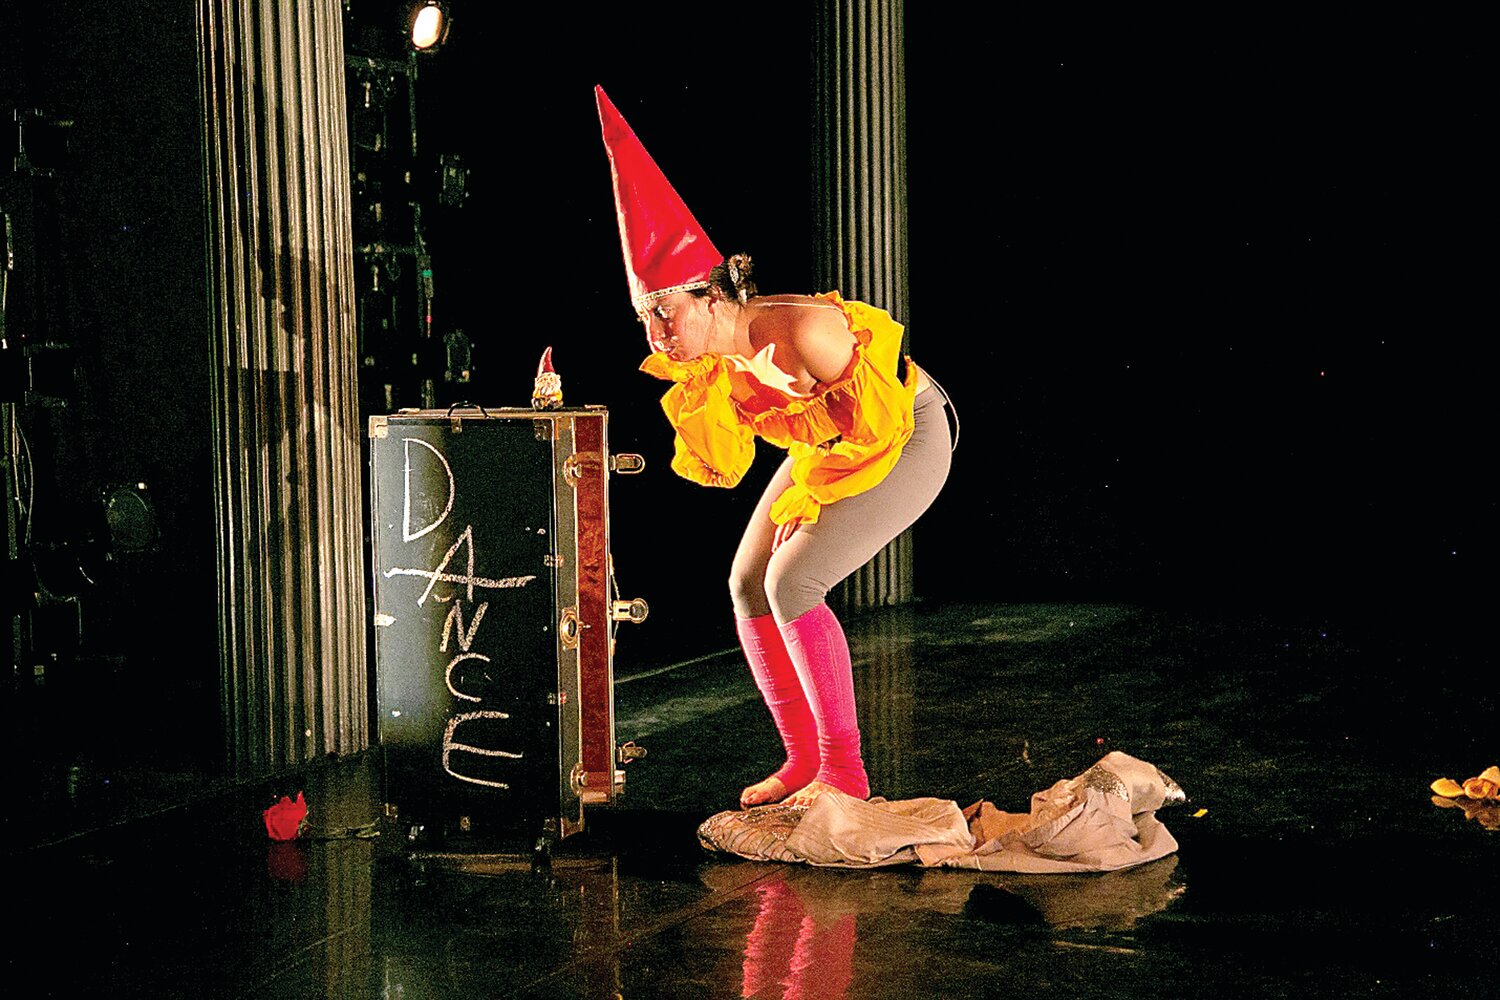 Philadelphia-based performance artist Alexandra Tatarsky will present “Gnome Core” Saturday and Sunday at Glen Foerd.